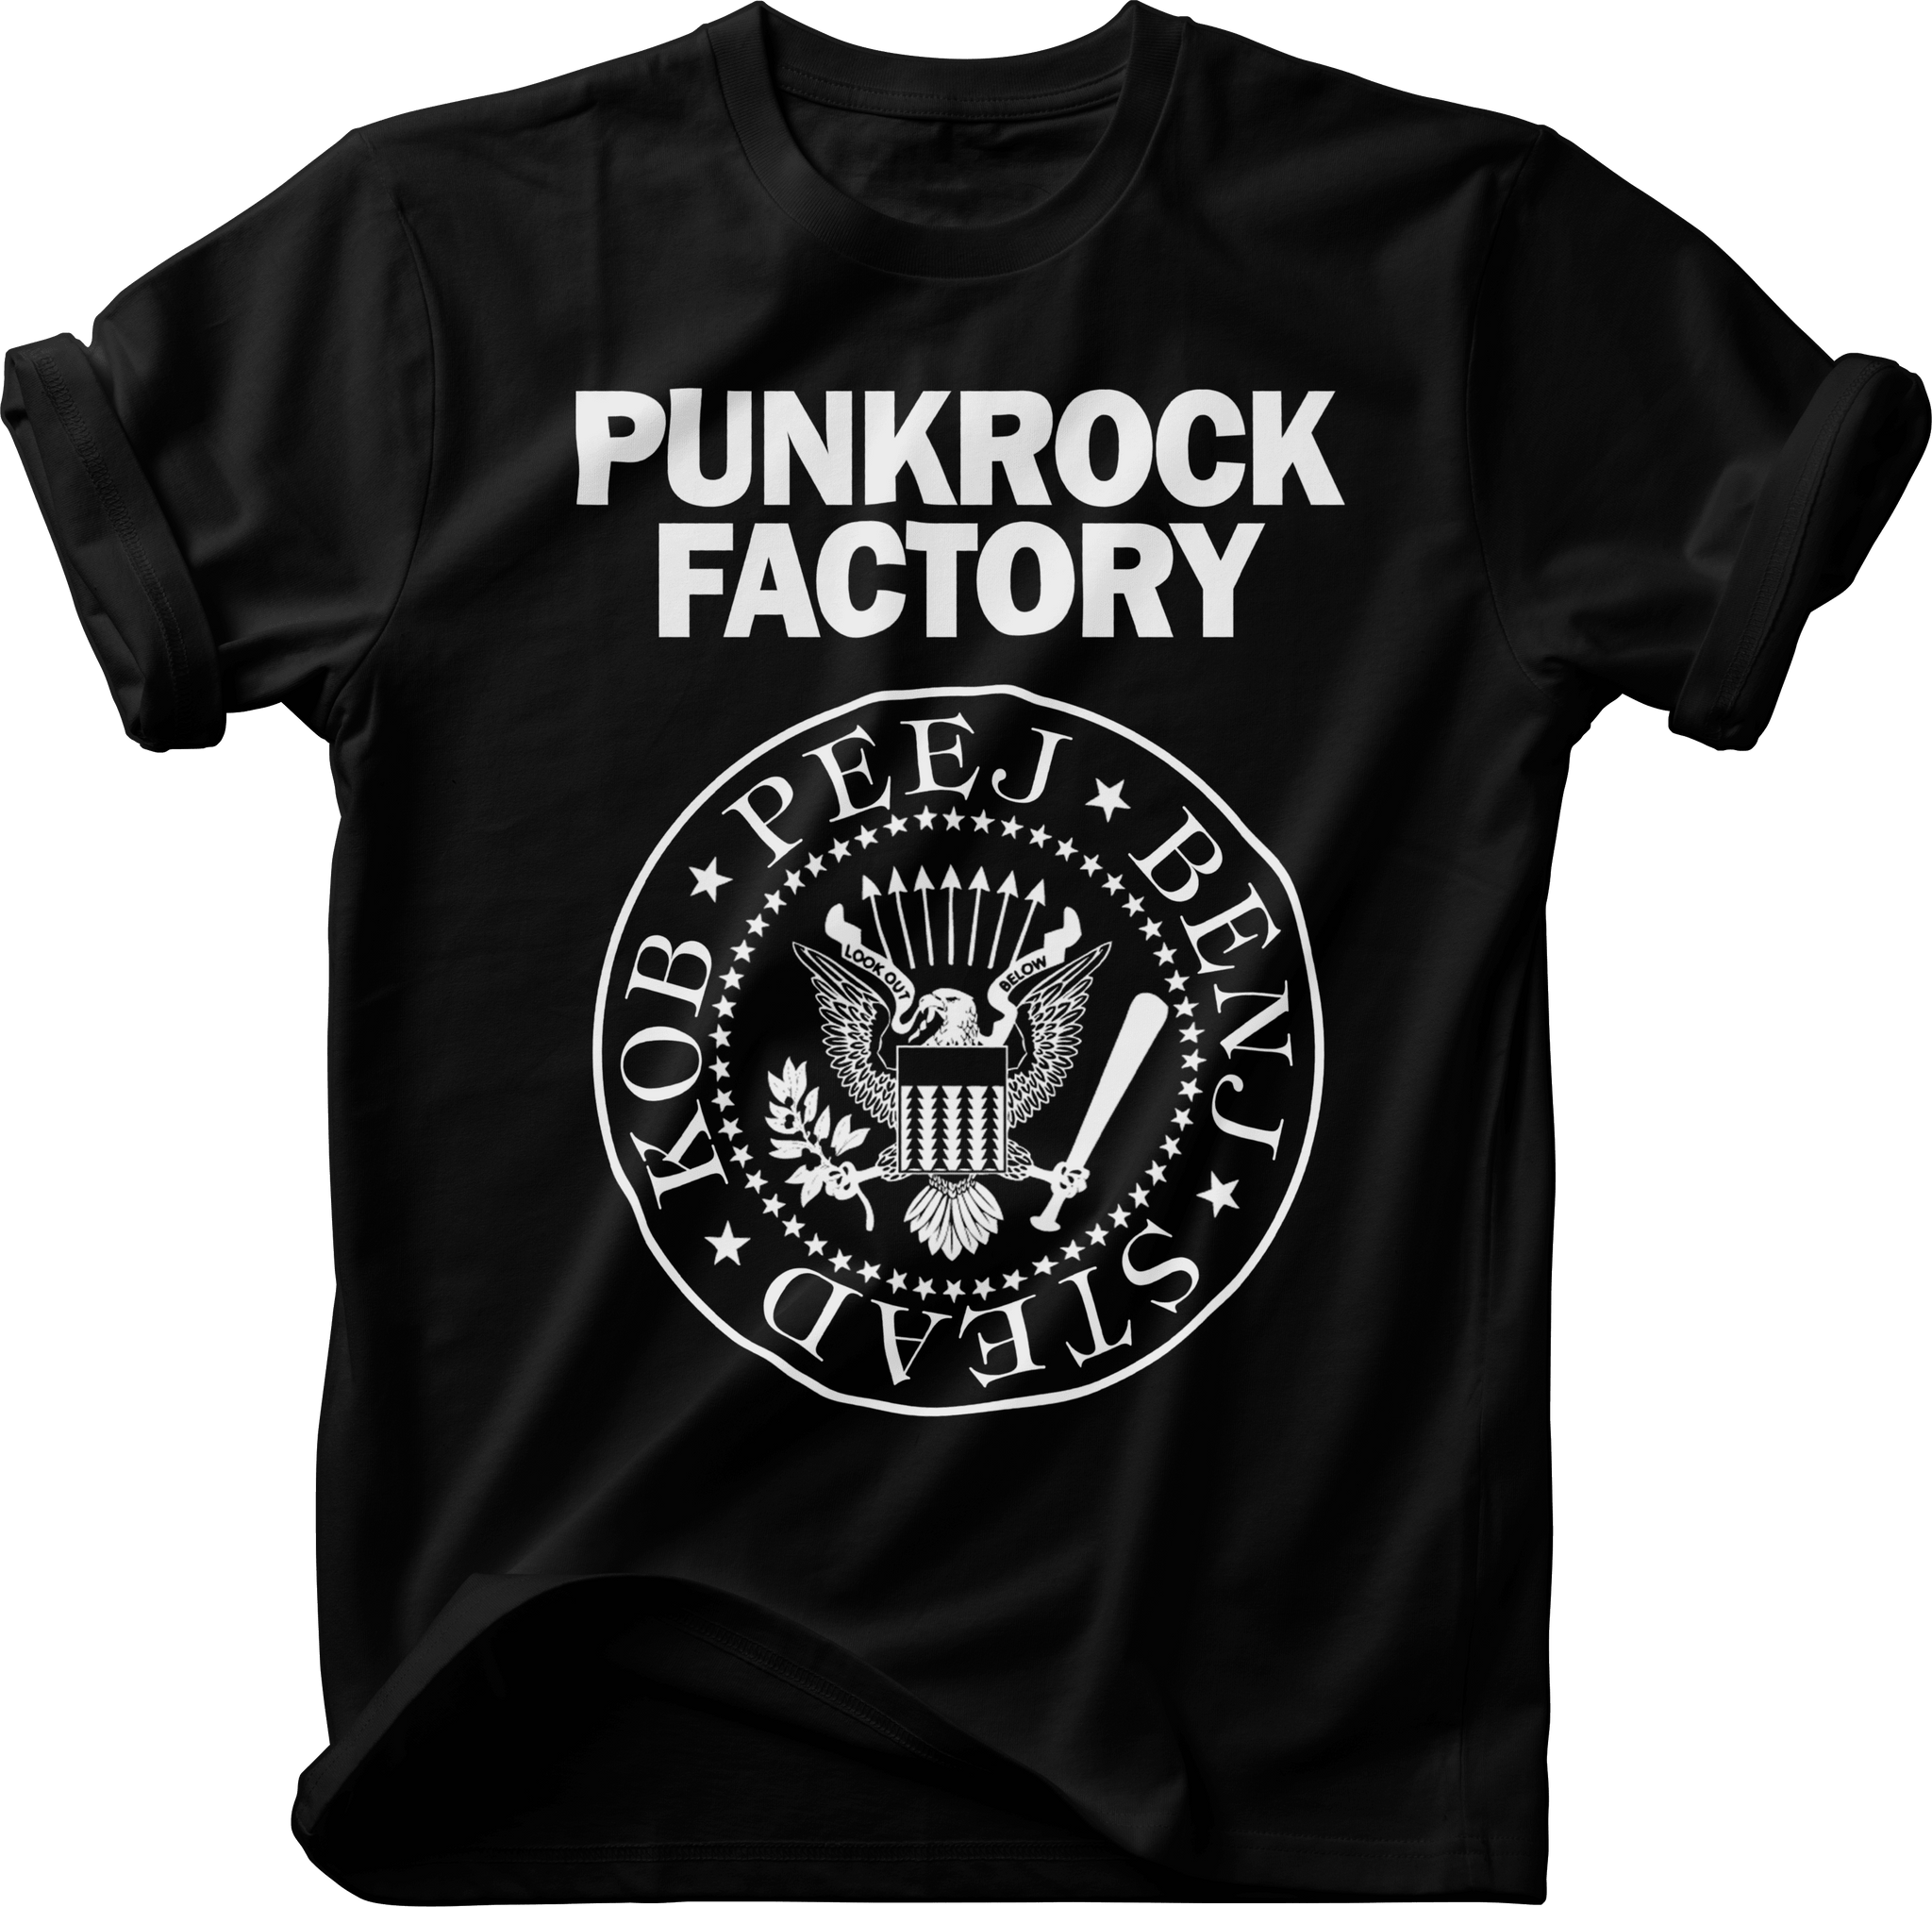 Hey Ho, Let's Go! Apparel Punk Rock Factory 